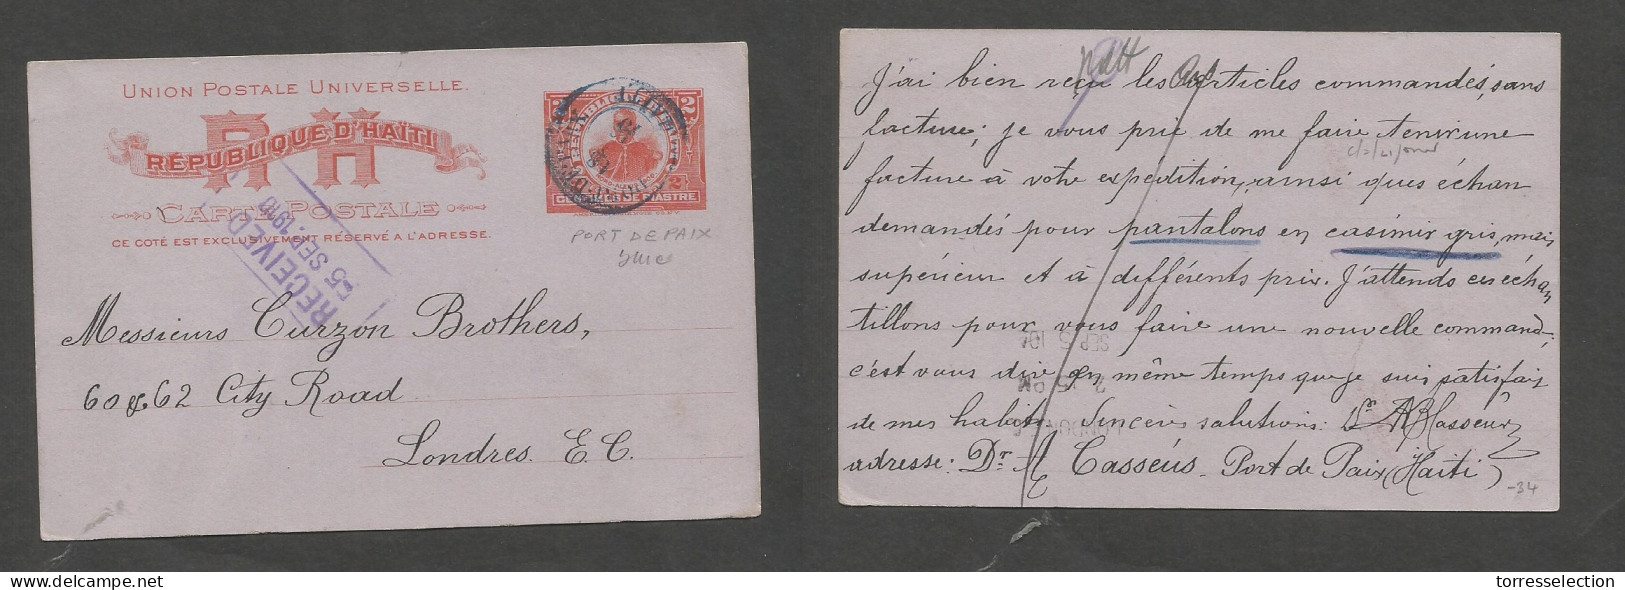 HAITI. 1910 (18 Aug) Port Paix - London, UK (5 Sept) 2c Red Stat Card. Fine Used. Arrival Cachet. SALE. - Haití